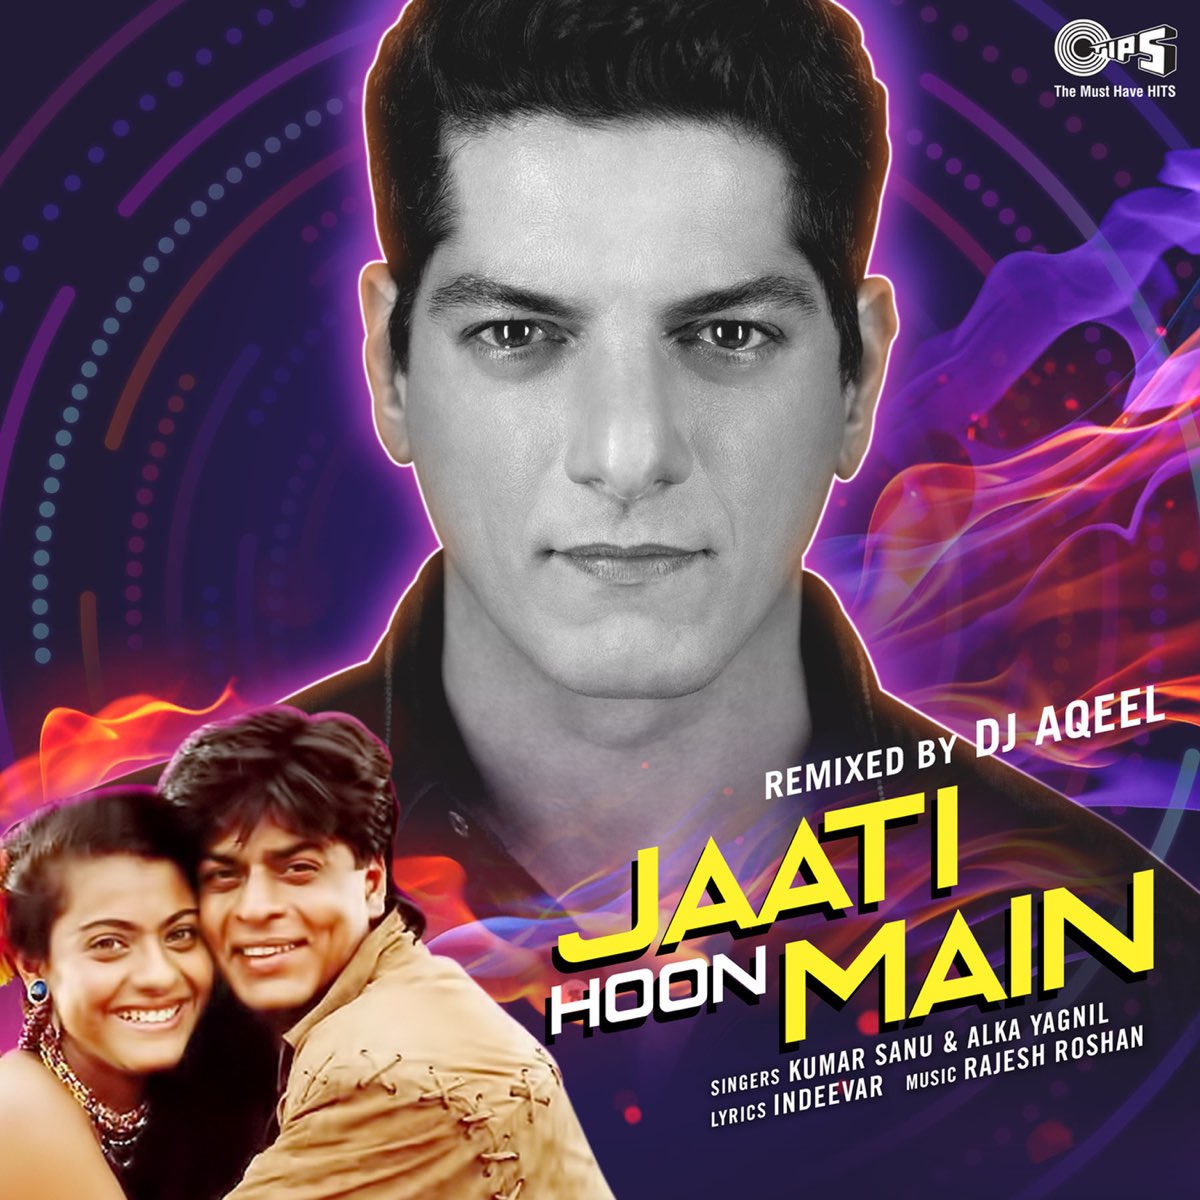 Jaati Hoon Main (DJ Aqeel Remix) - Single by Rajesh Roshan, Kumar Sanu &  Alka Yagnik on Apple Music